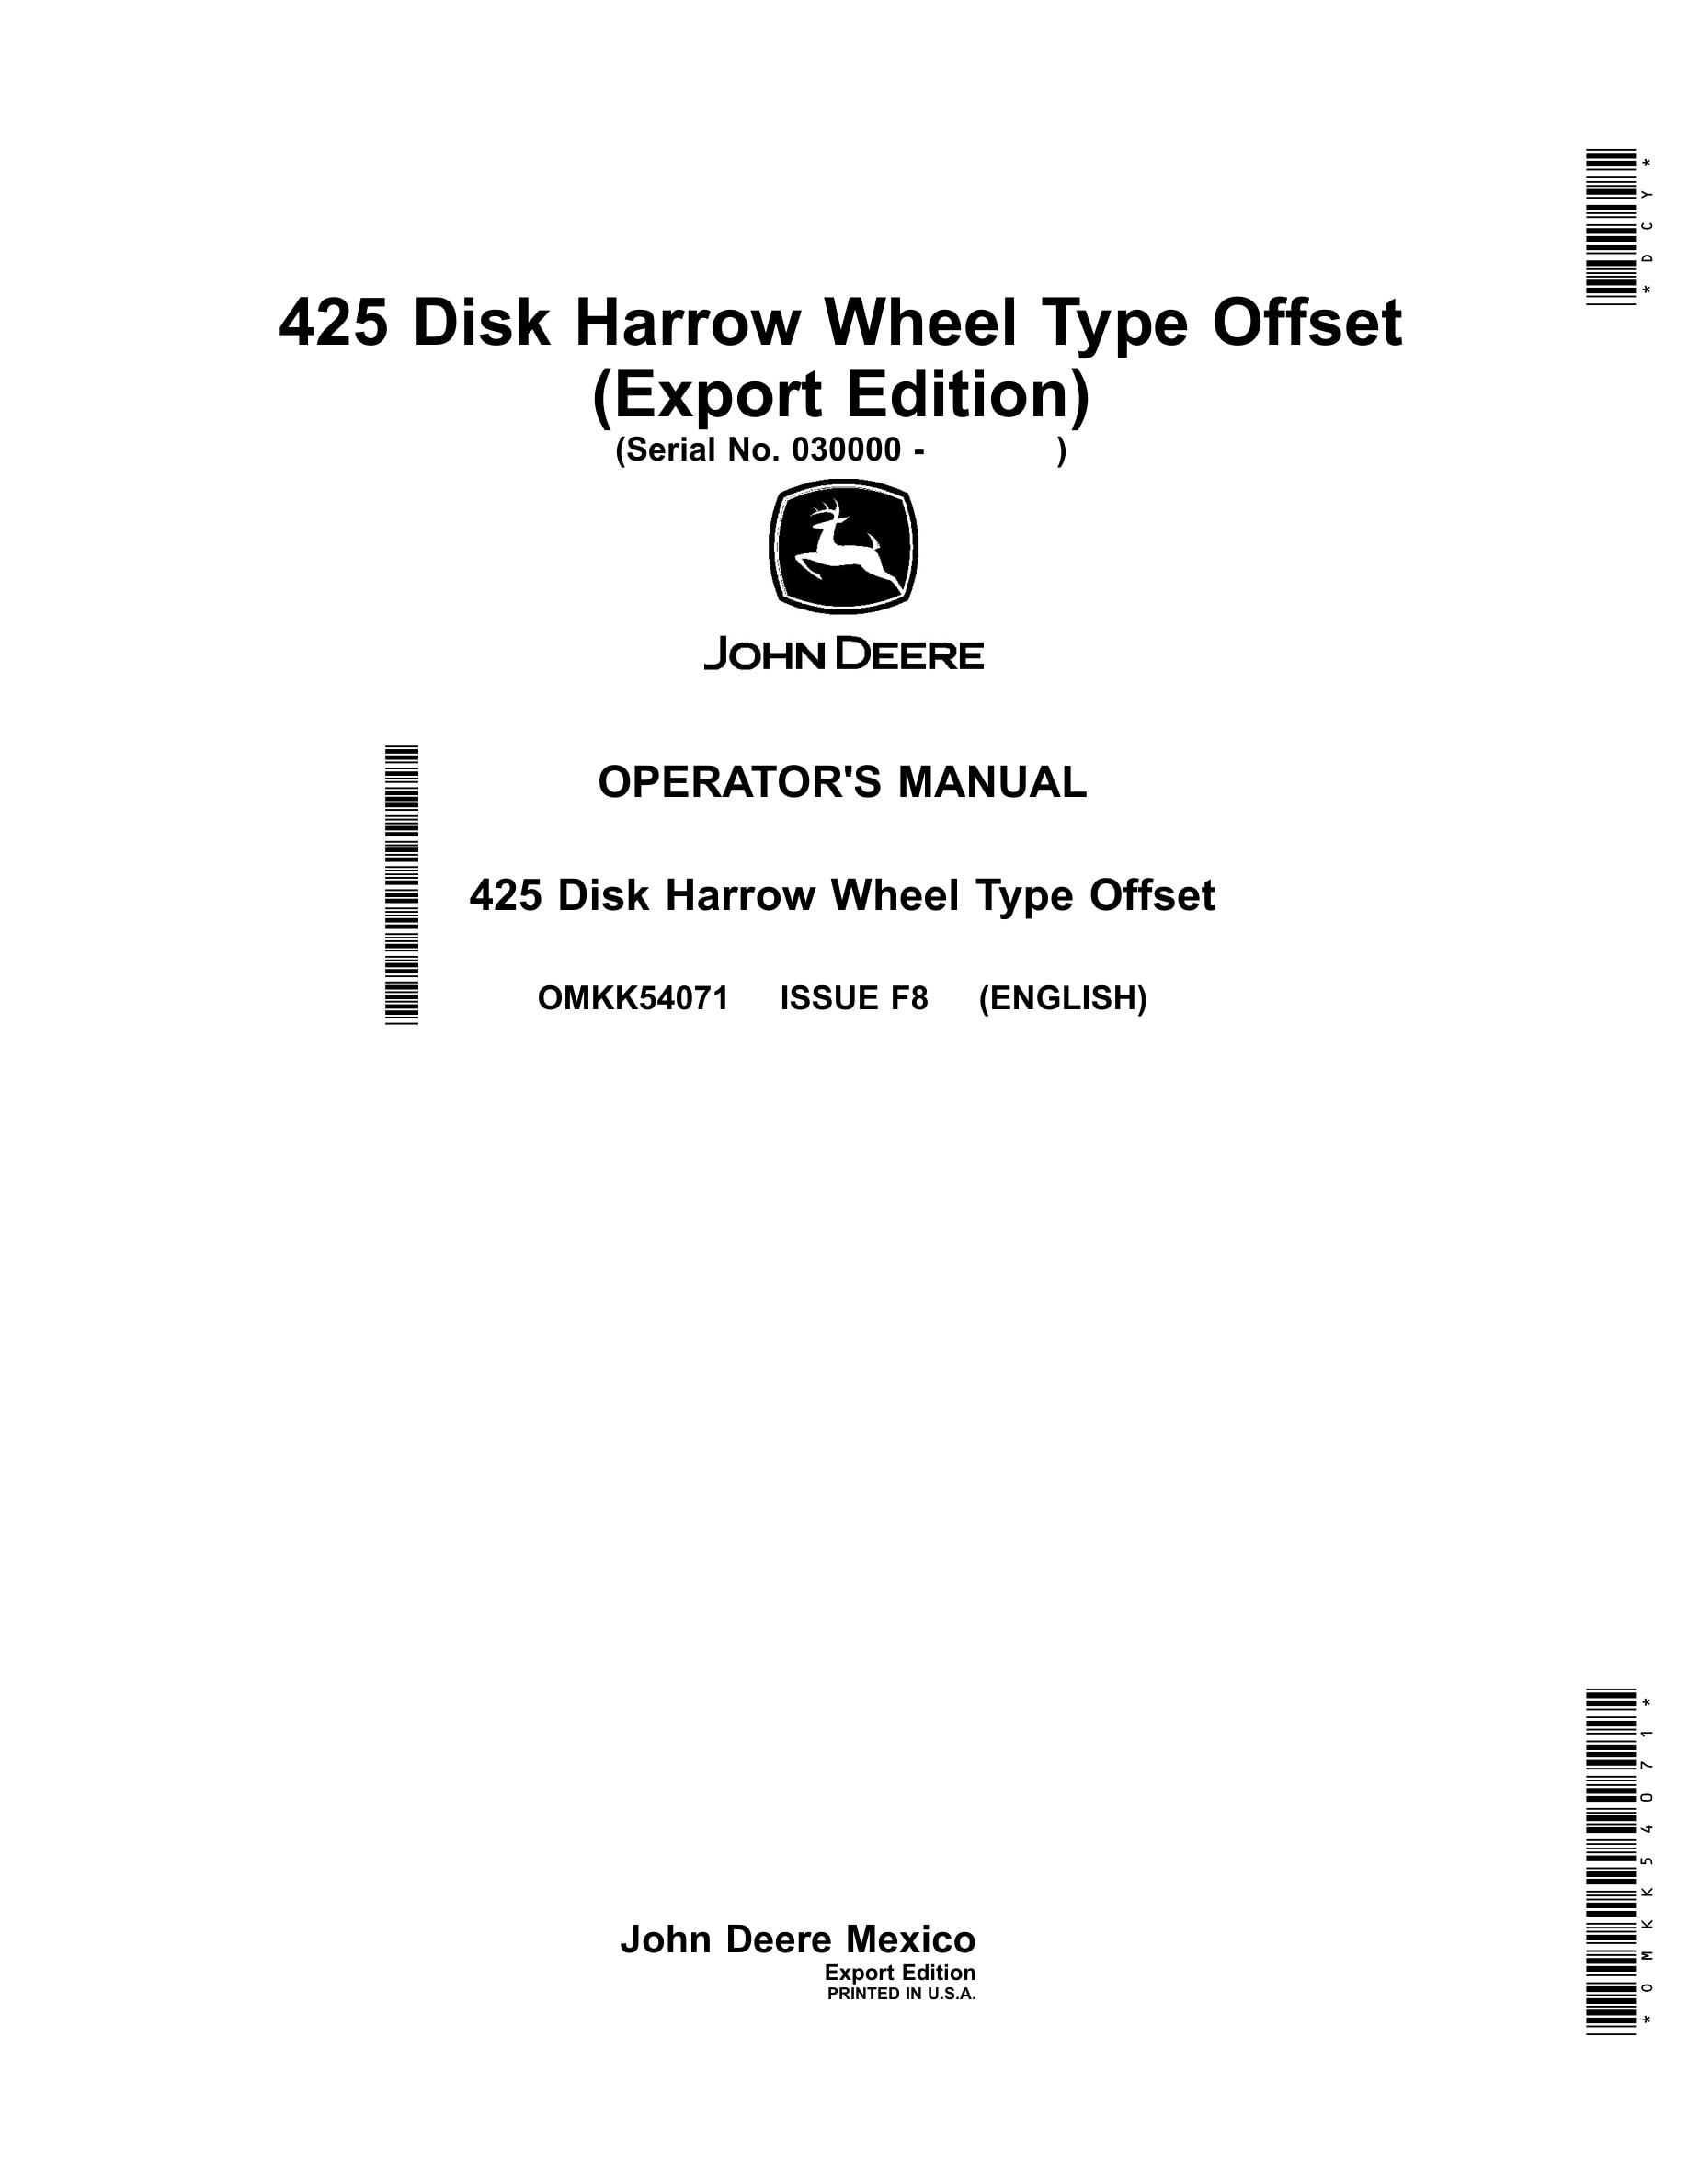 John Deere 425 Disk Harrow Wheel Type Offset Operator Manual OMKK54071-1